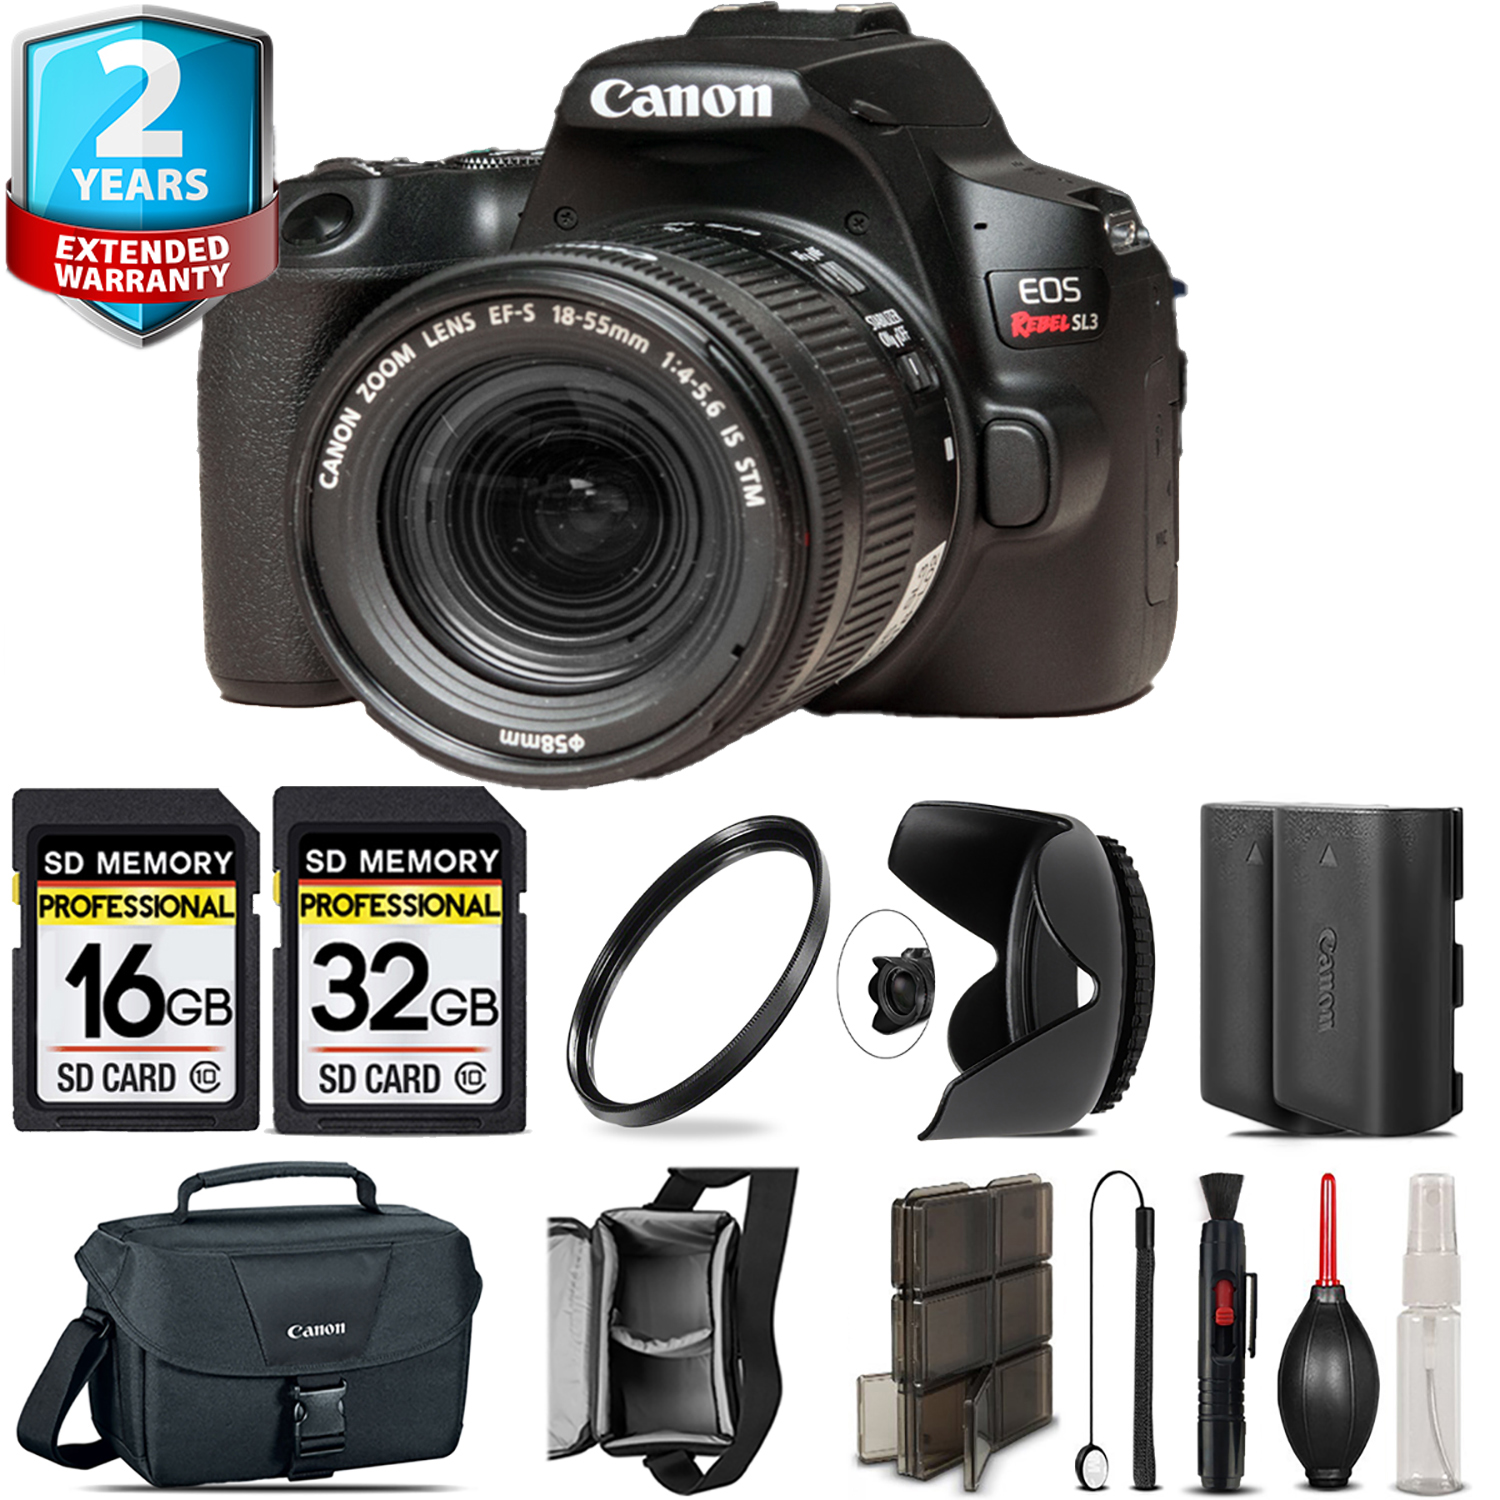 EOS Rebel SL3 Camera (Black) + 18-55mm IS STM + Tulip Hood + - 48GB Kit *FREE SHIPPING*